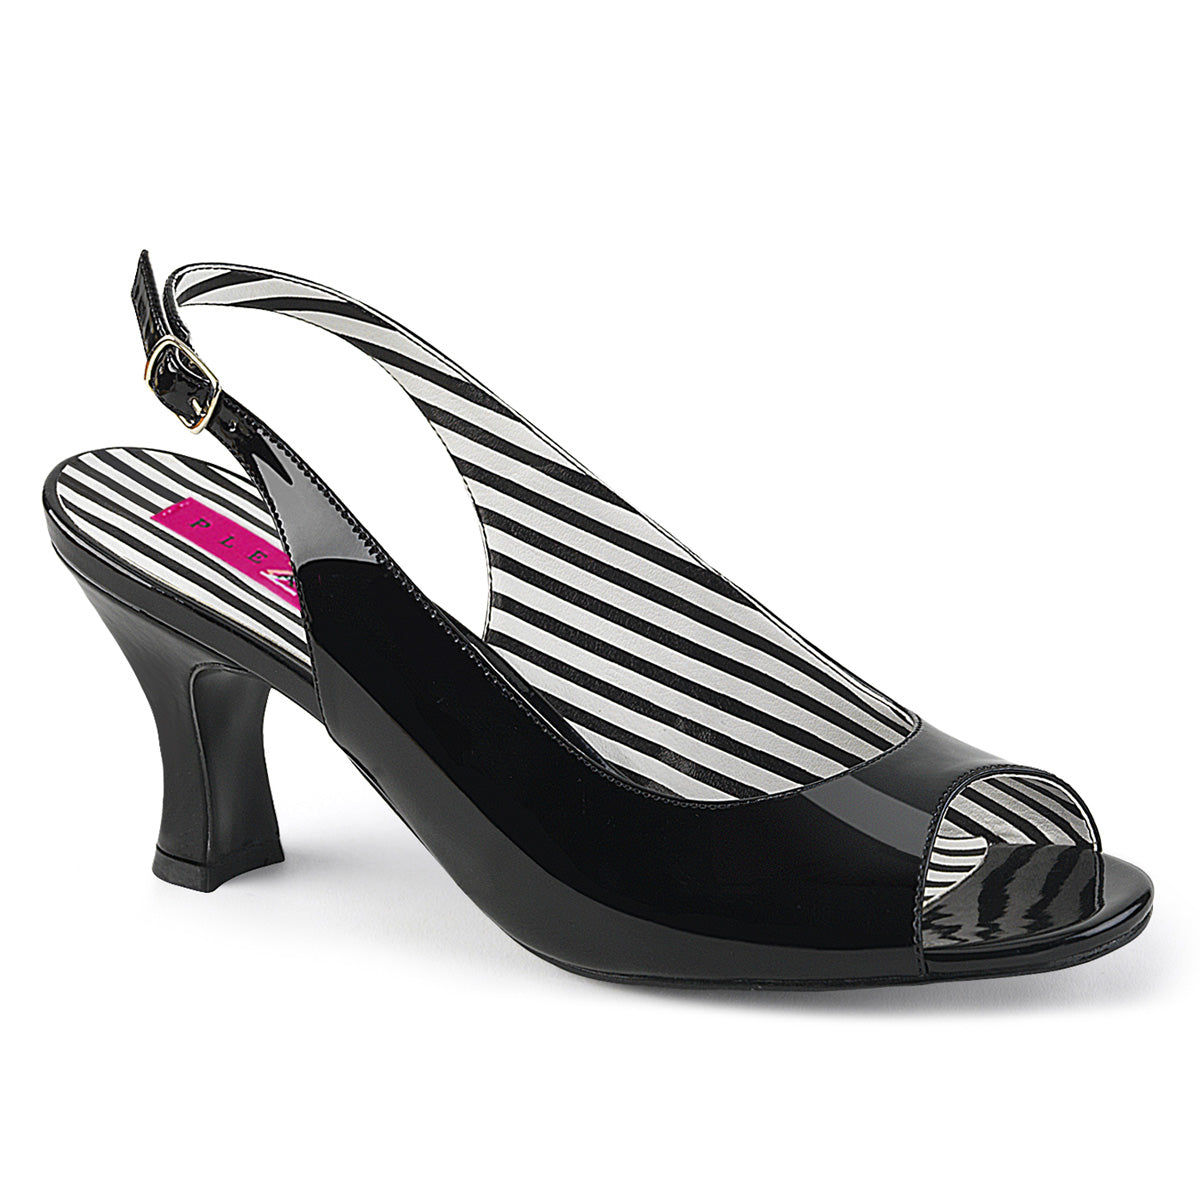 JENNA-02 Large Size Ladies Shoes 3 Inch Heel Black Patent Fetish Footwear